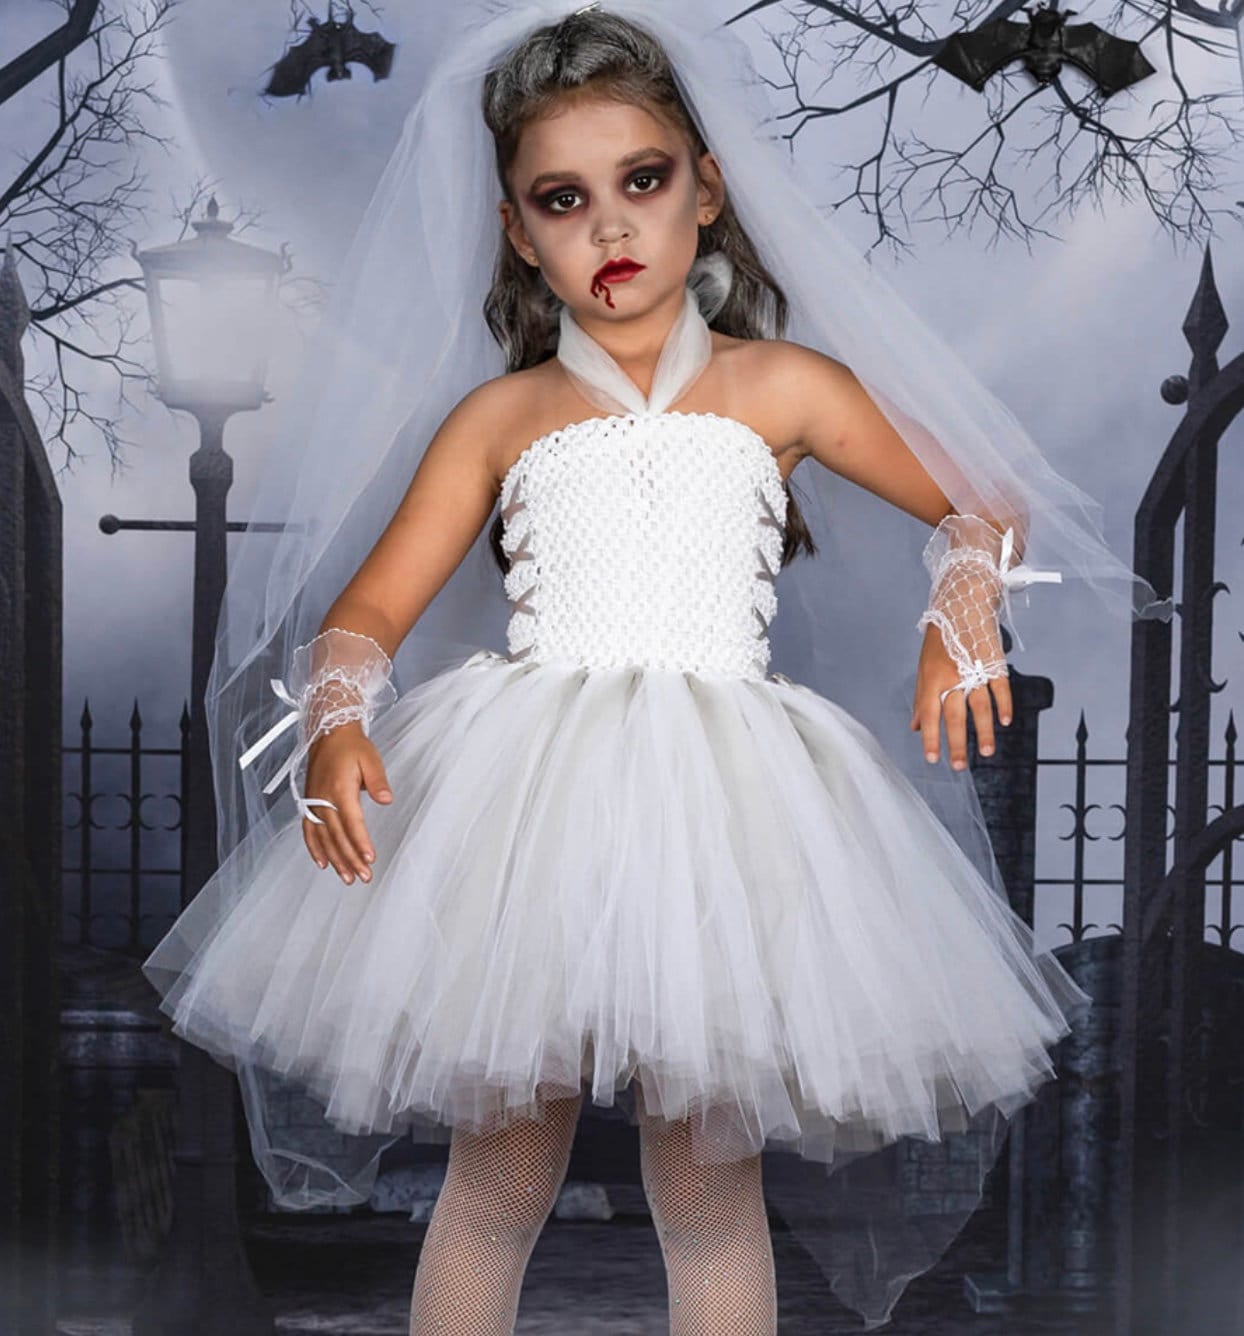 FantastCostumes Women Halloween Zombie Bride Ghost Costumes Delicate Dead  Bride Dress Festival Party Cosplay